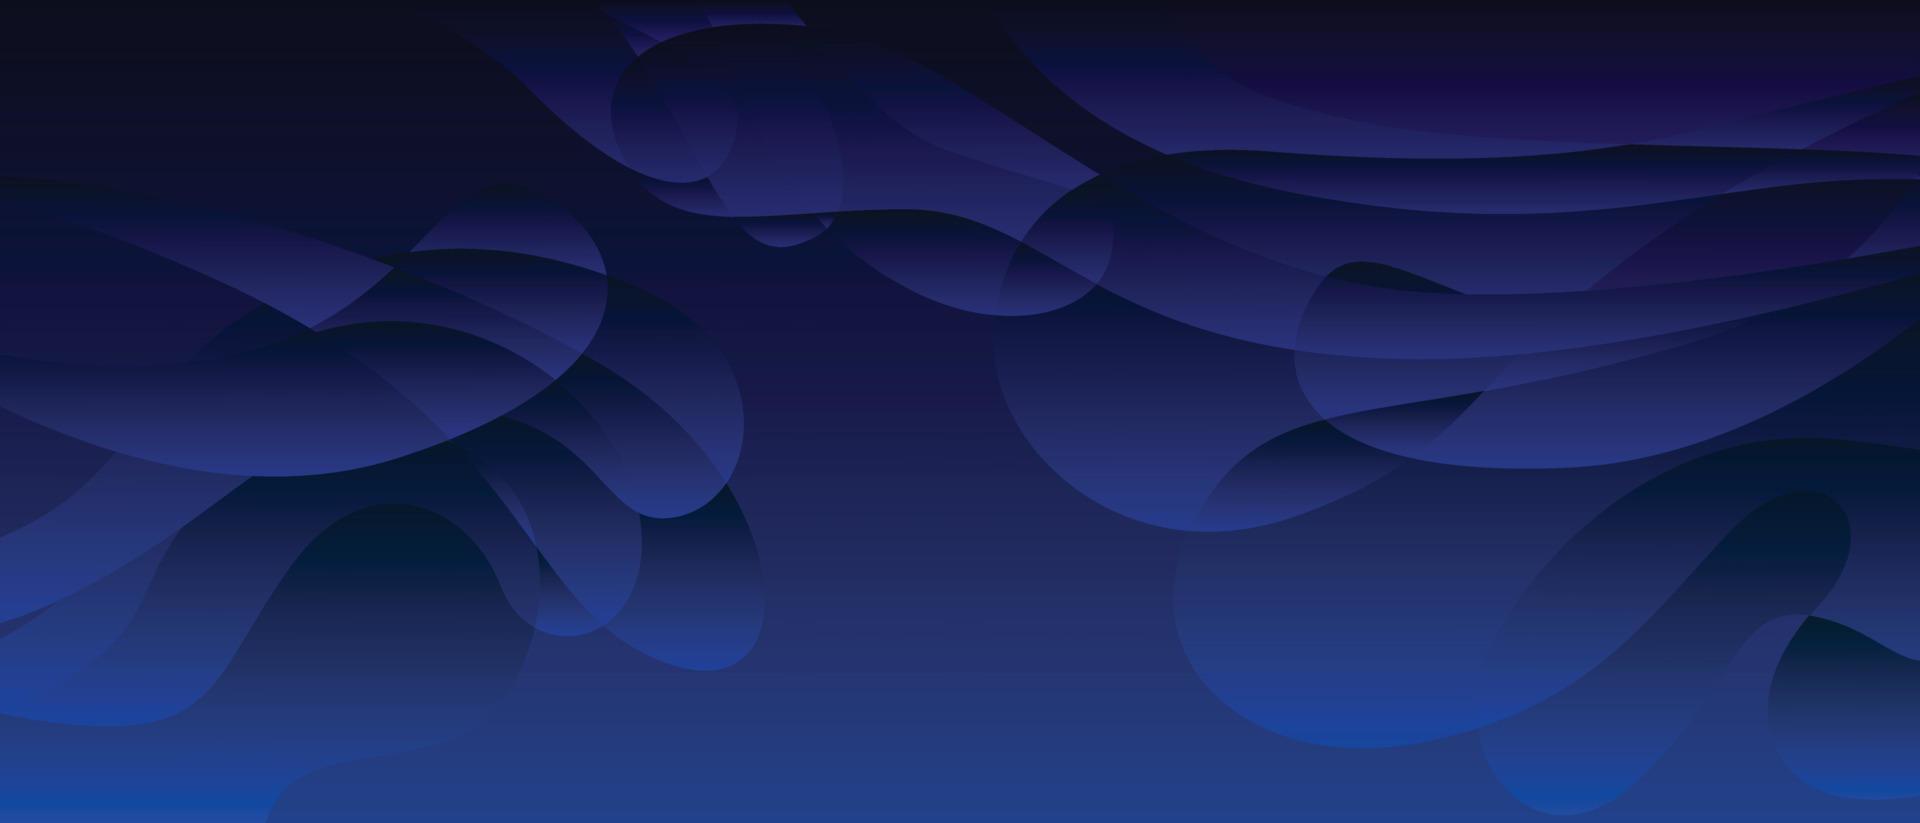 dark blue art banner background vector illustration